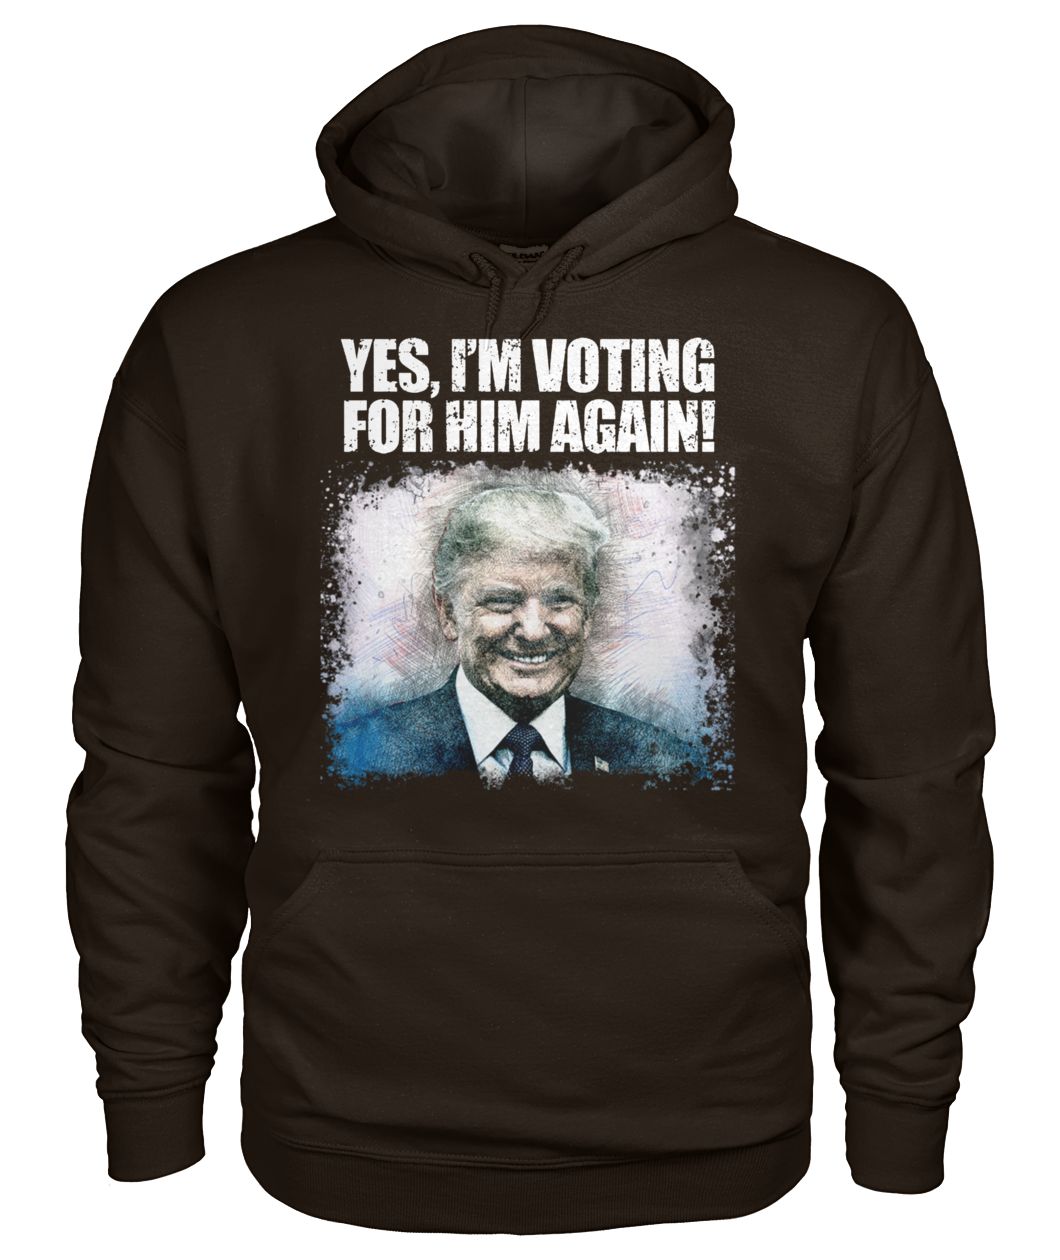 Donald trump yes I'm voting for him again gildan hoodie